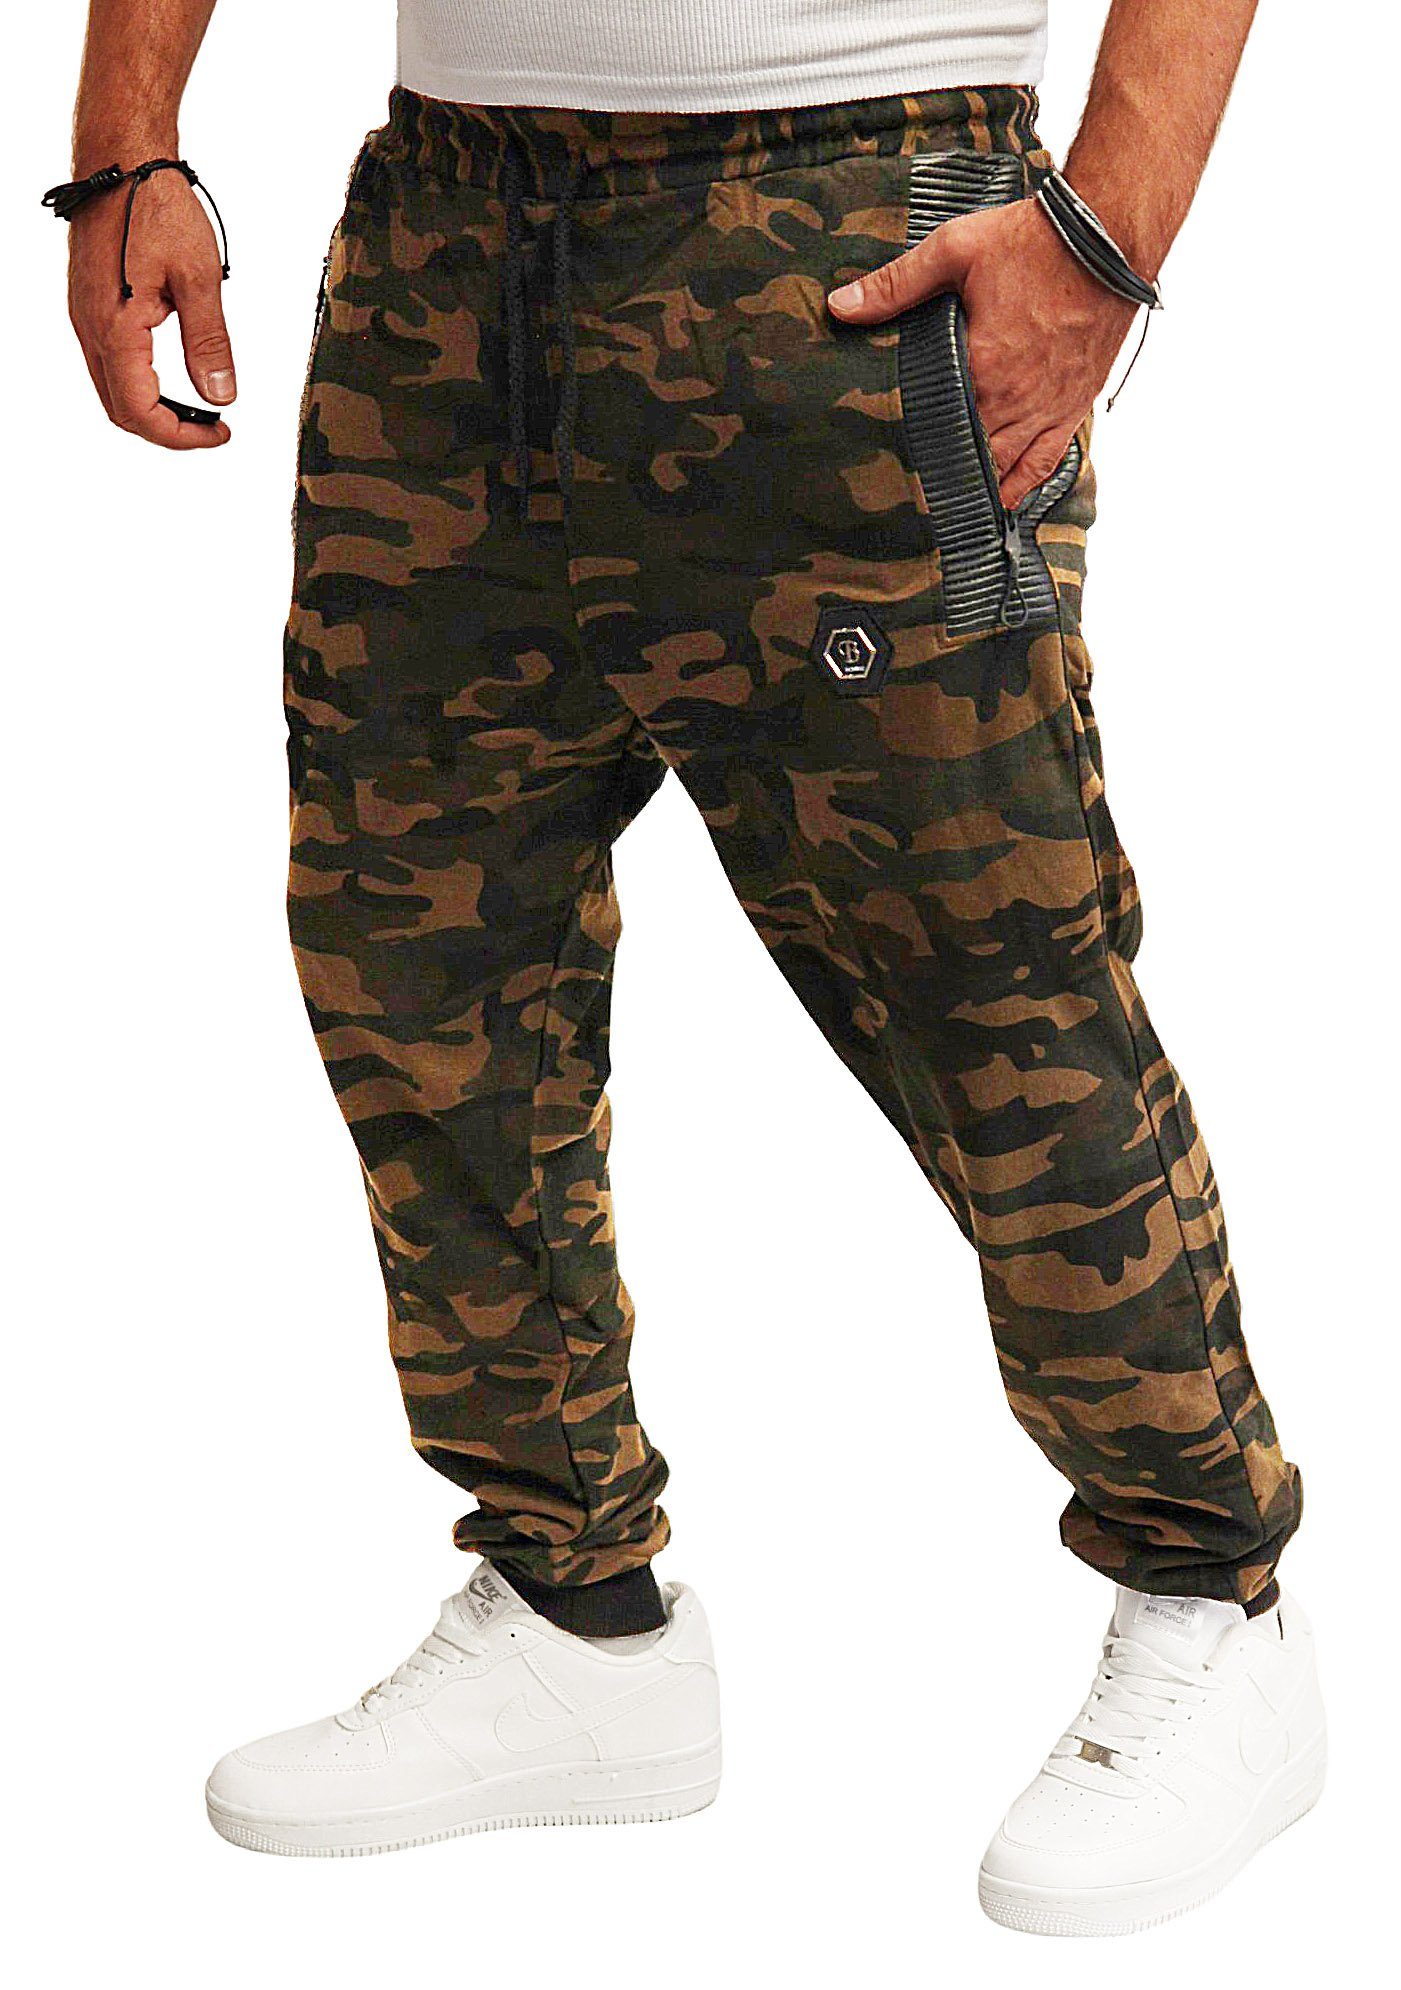 H.51 Hose Camouflage RMK Trainingshose Army Fitnesshose Herren Camouflage Jogginghose Sport Tarn